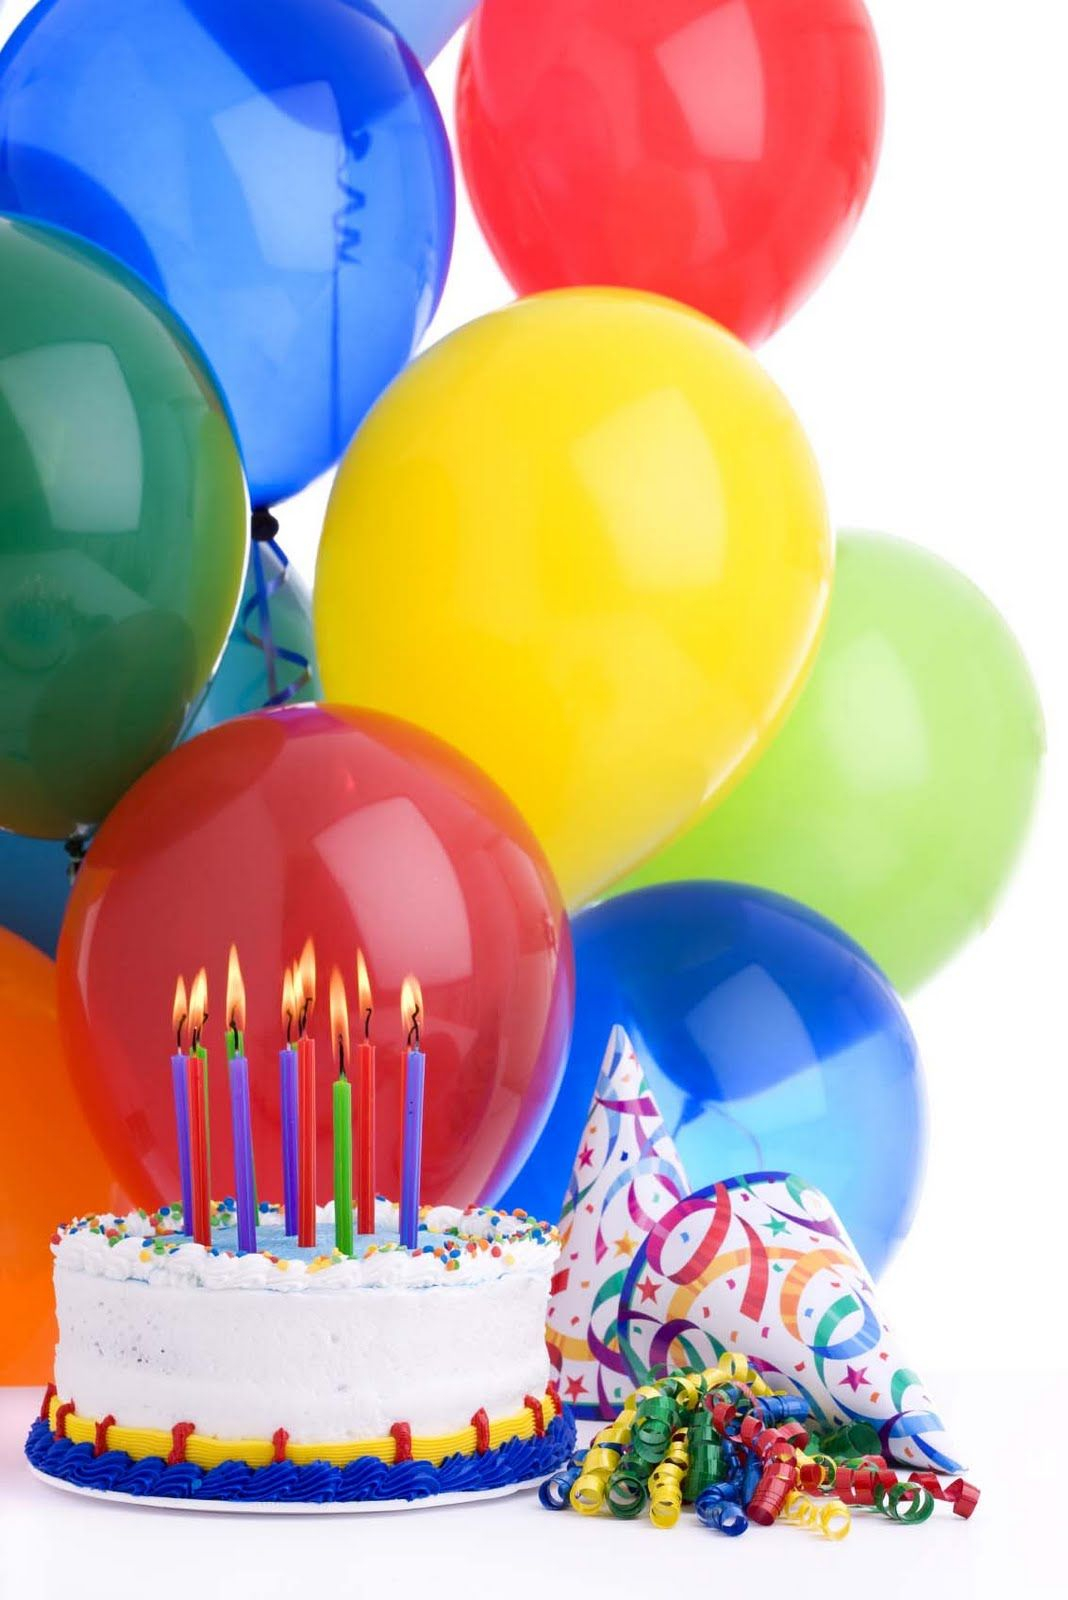 Birthday Cake And Balloons Birthday Cake And Balloons Balloons Pinterest Happy